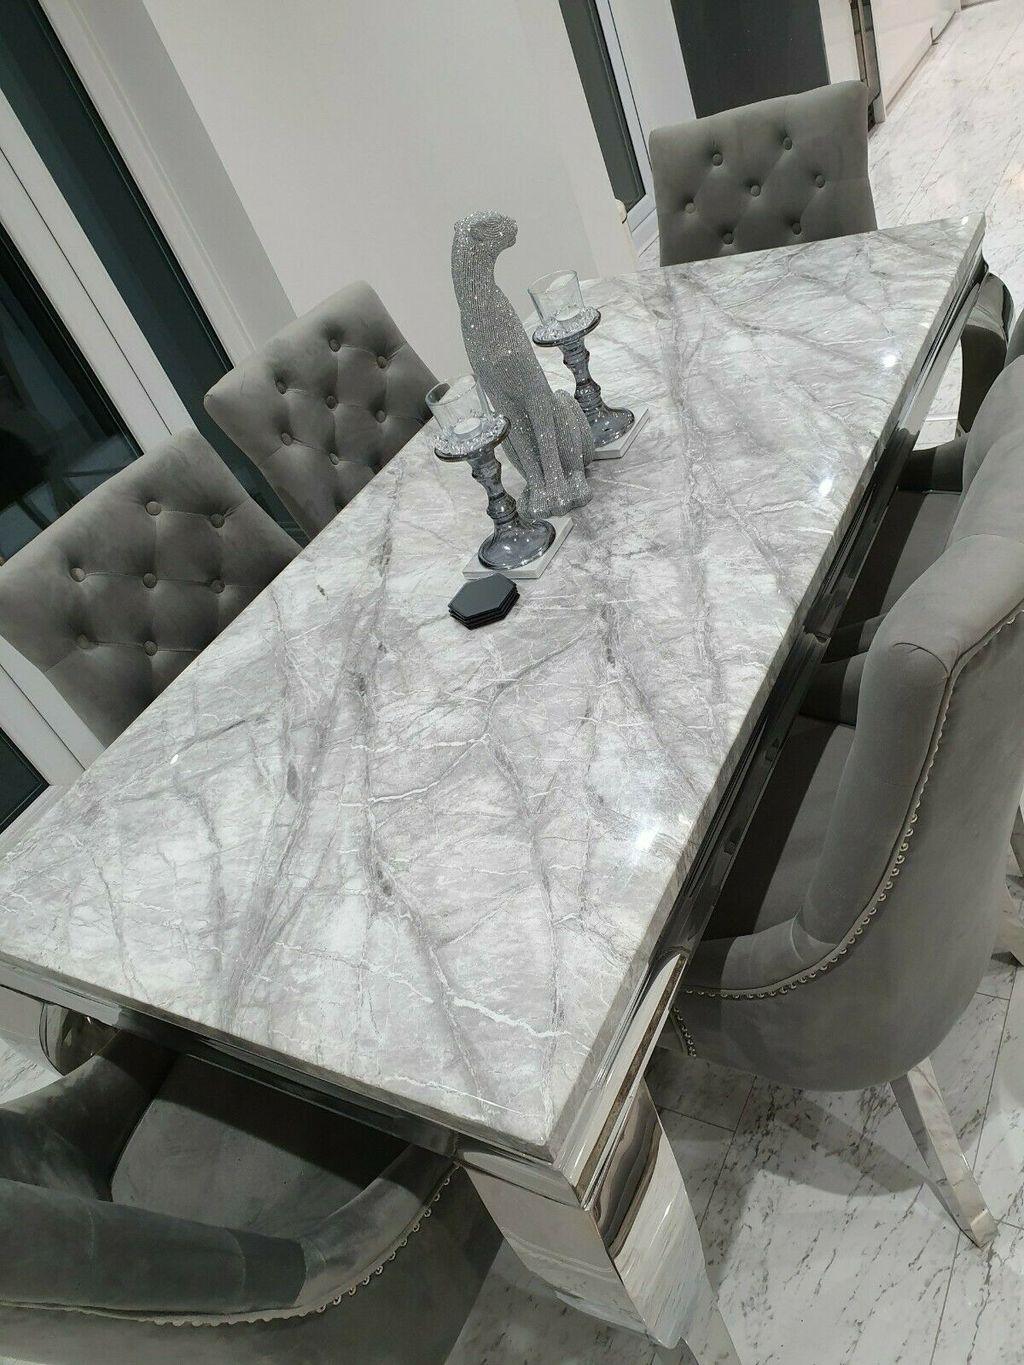 Louis 120cm Grey Marble Dining Table + 4 Grey Ring Knocker Chairs-Esme Furnishings